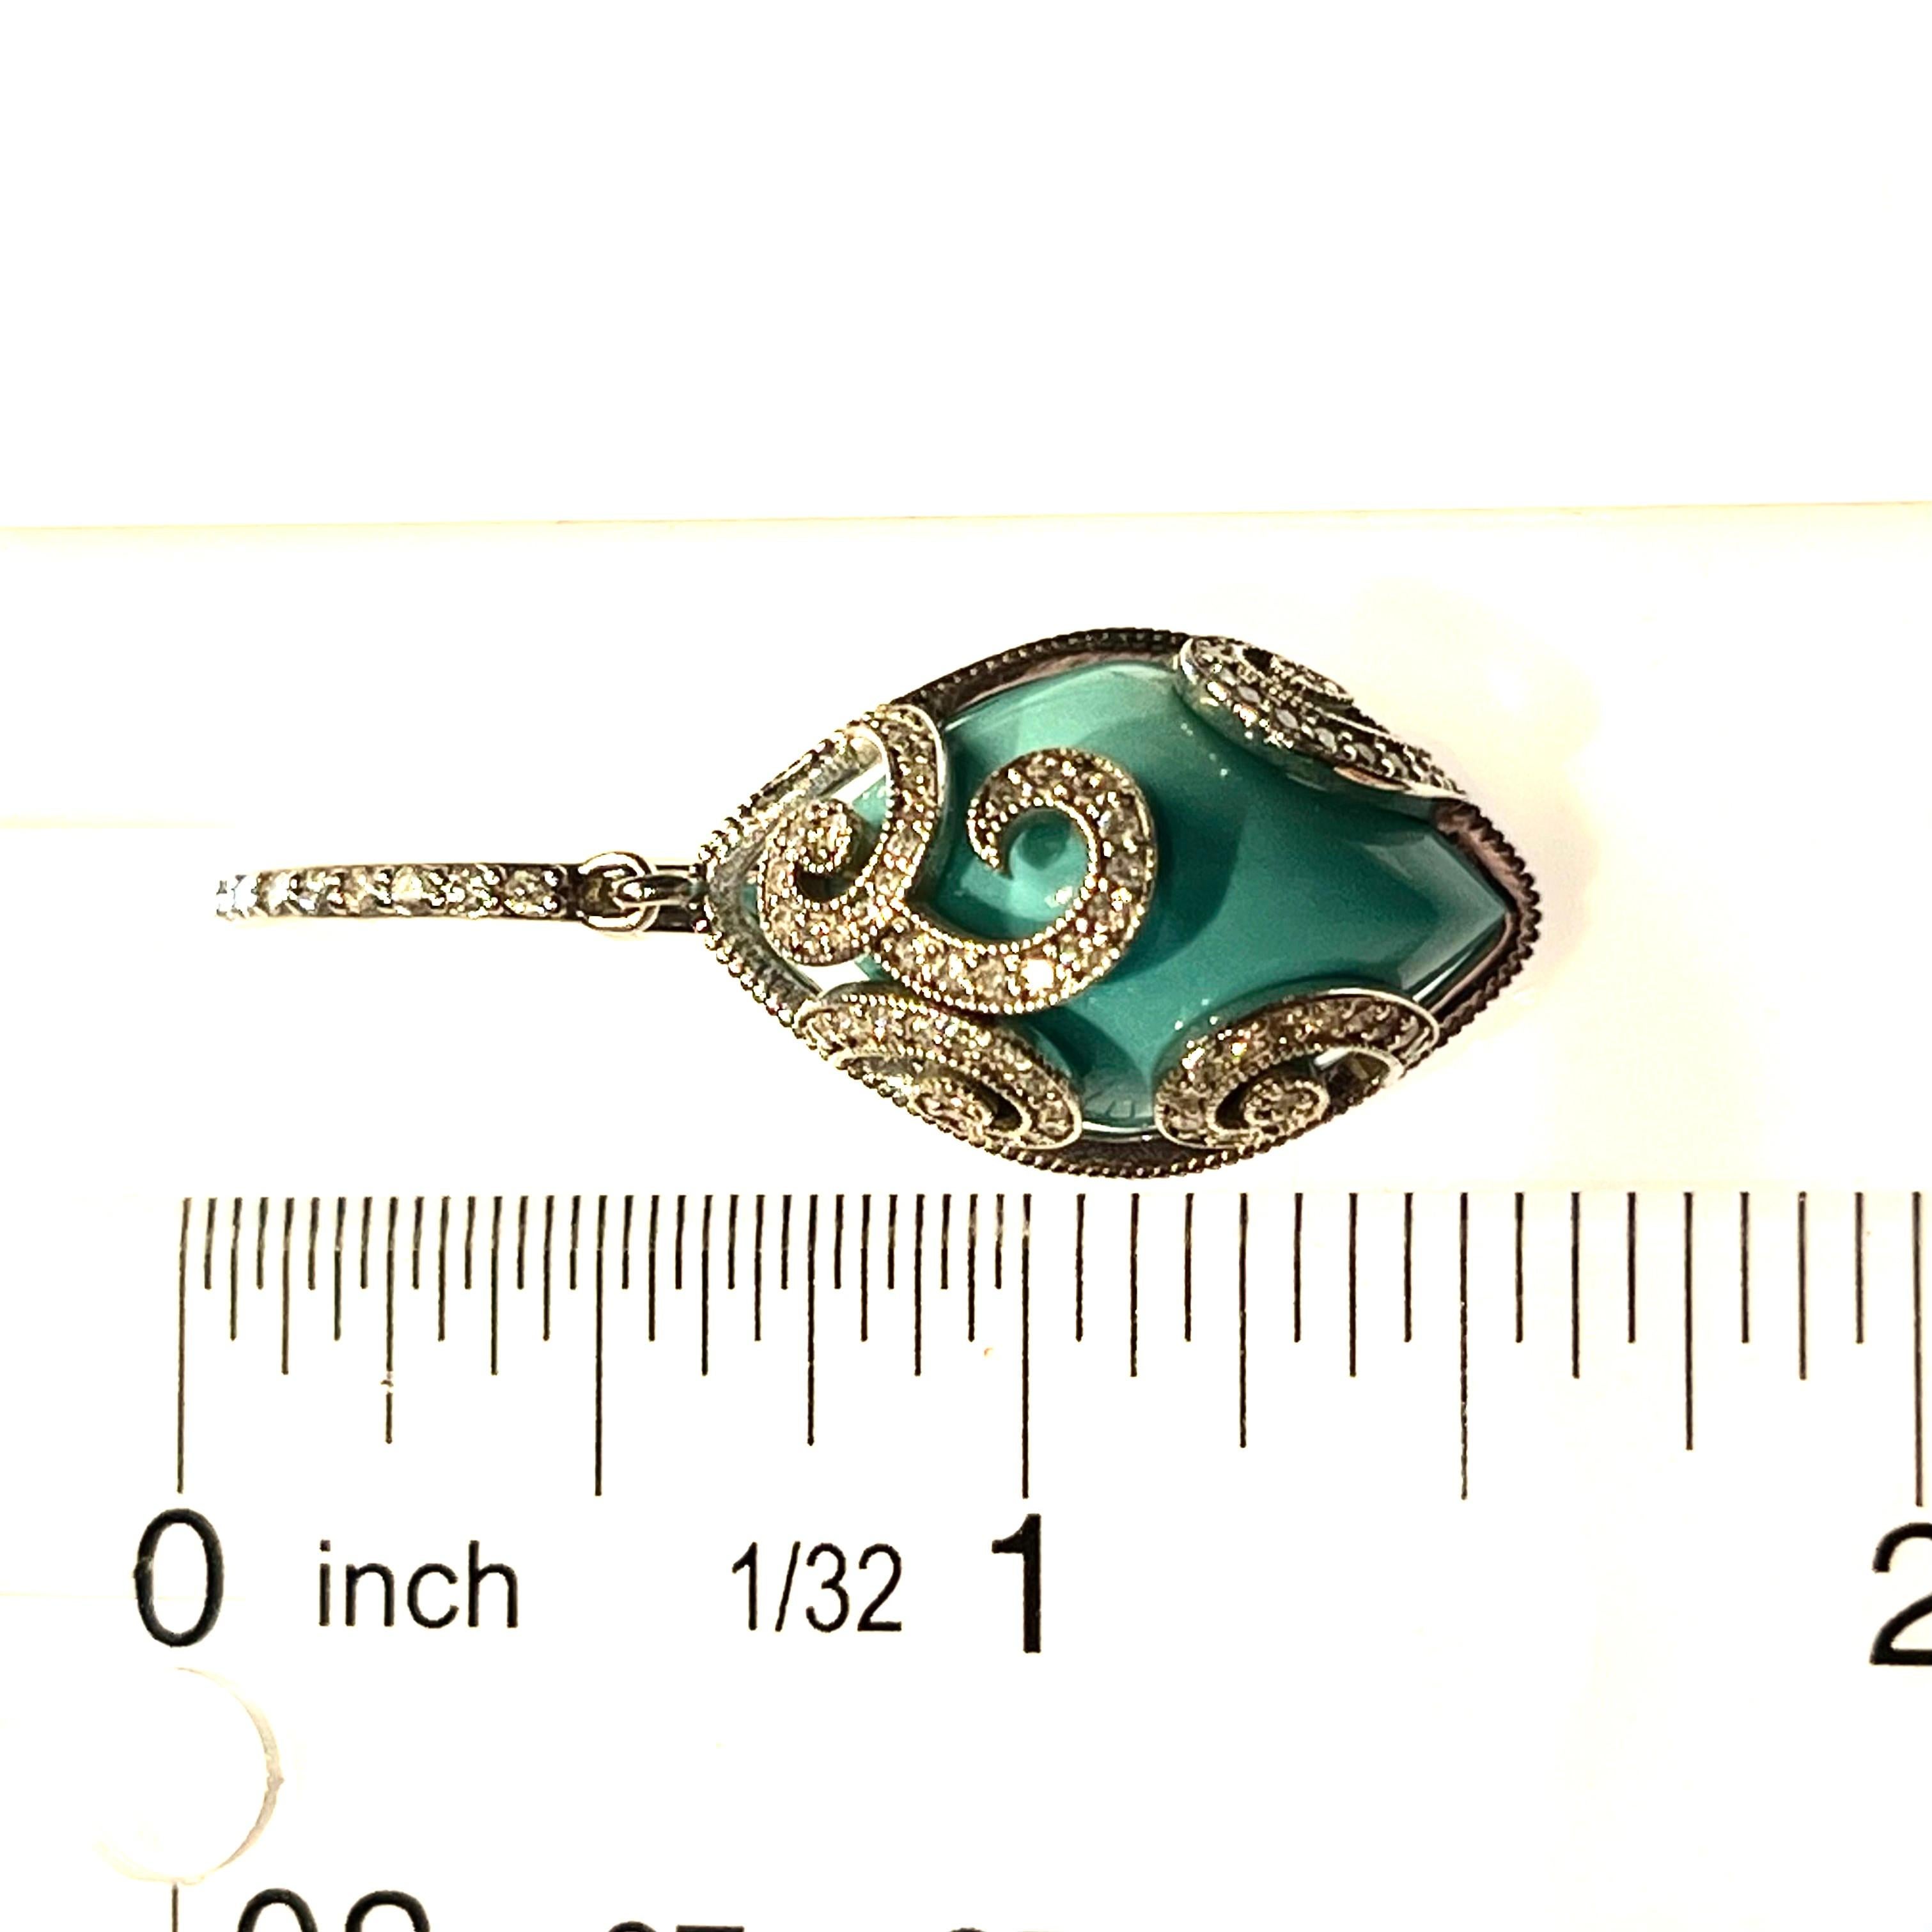 Cabochon Persian Turquoise Diamond Pendant Earrings 14k WG 26.85 TCW Certified For Sale